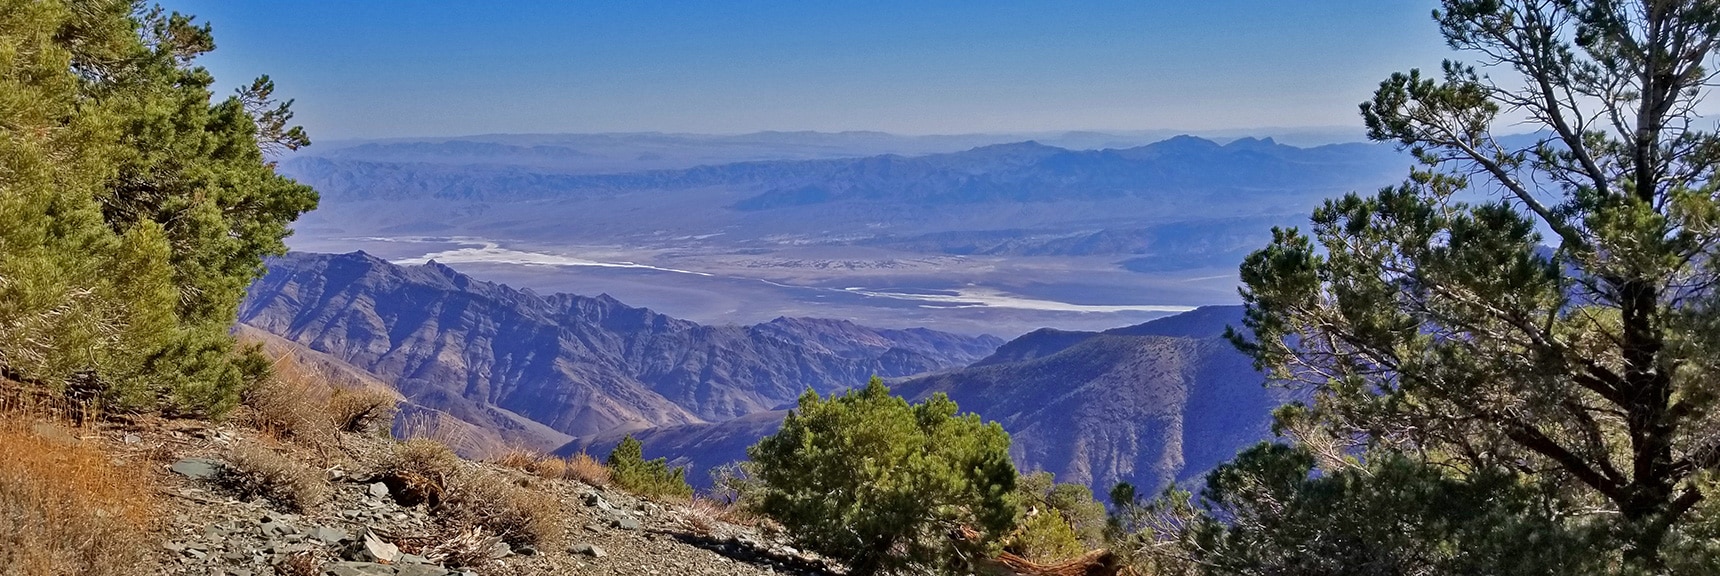 Death Valley, Furnace Creek Area, Viewed from Wildrose Peak Final Summit Approach | Wildrose Peak | Panamint Mountain Range | Death Valley National Park, California